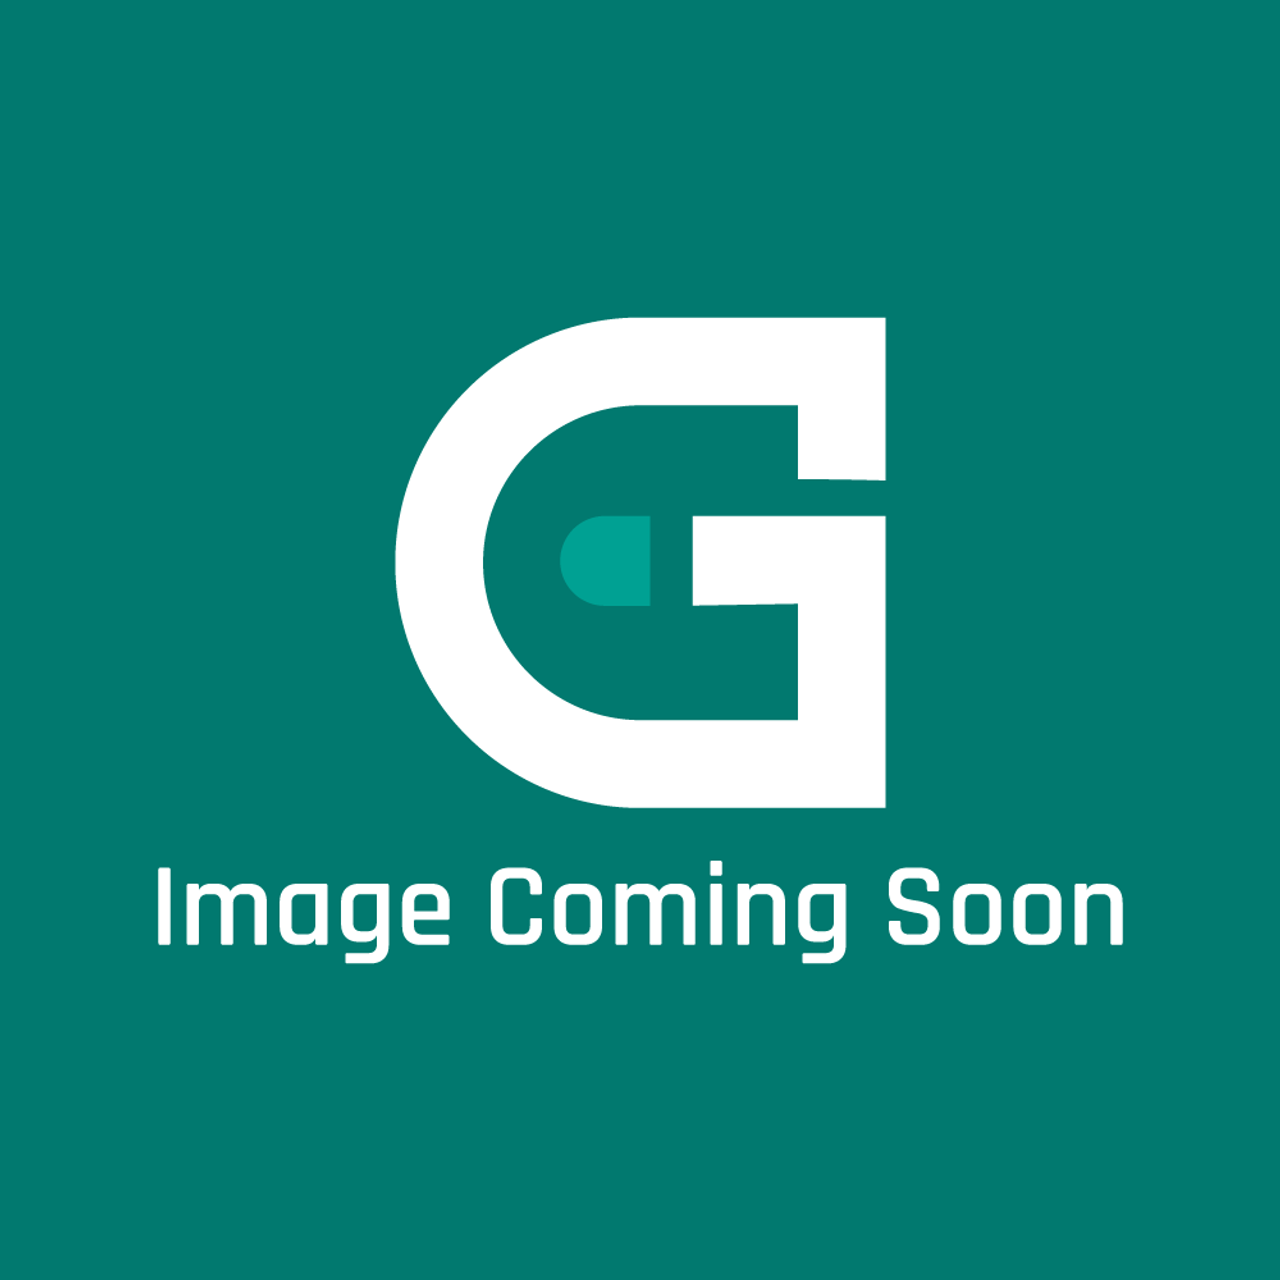 Viking G5004515BK - SELECTOR KNOB ASSY KIT(VEDODC) - Image Coming Soon!